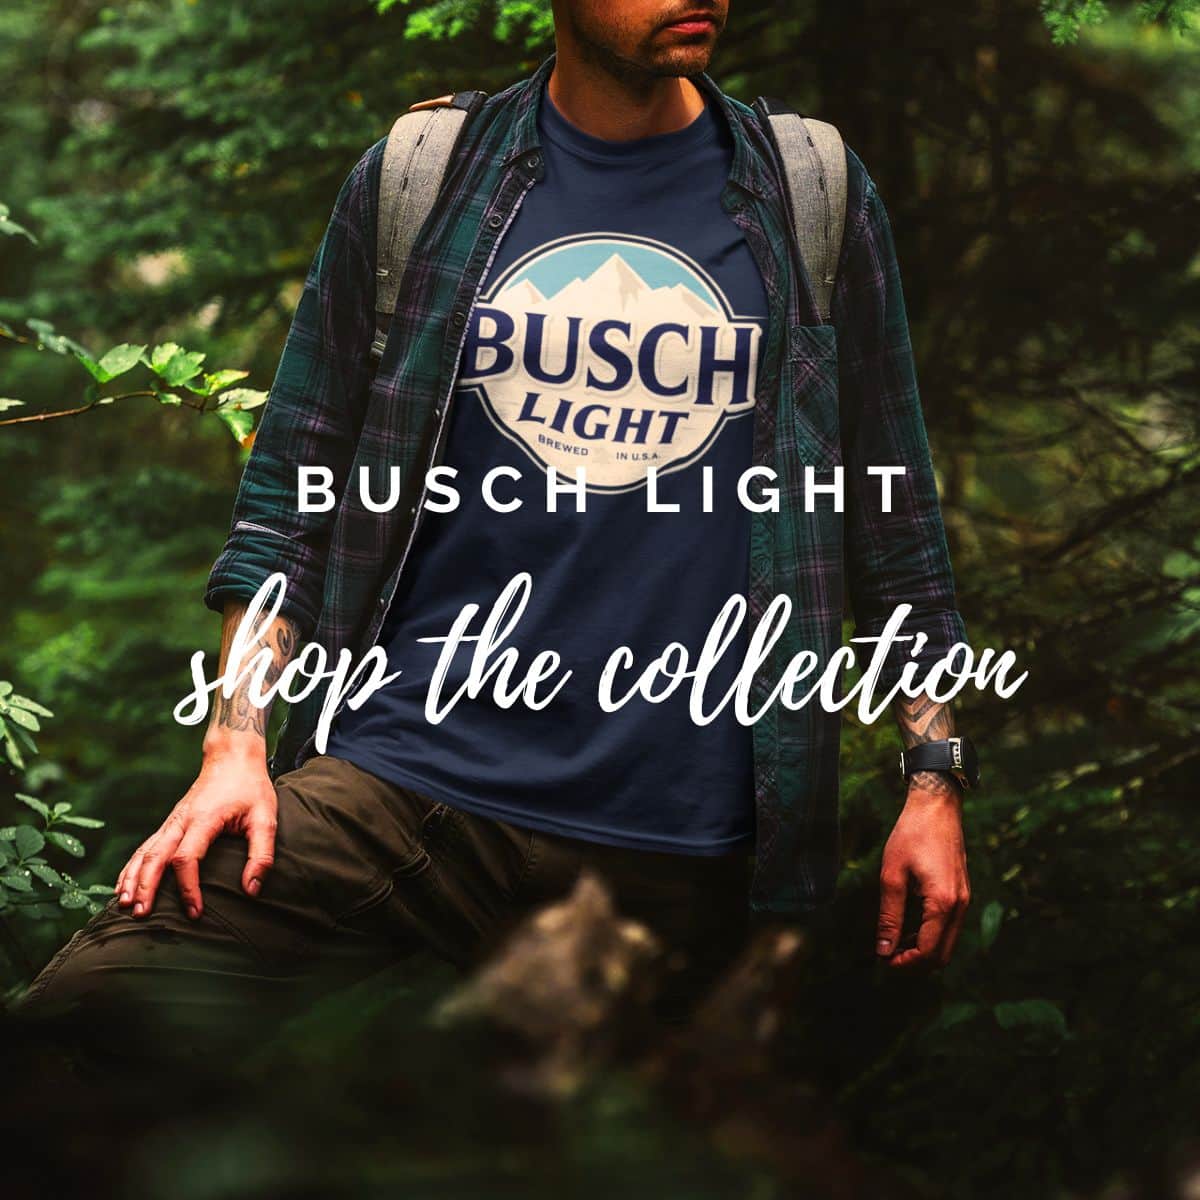 Busch Merchandise & Clothing